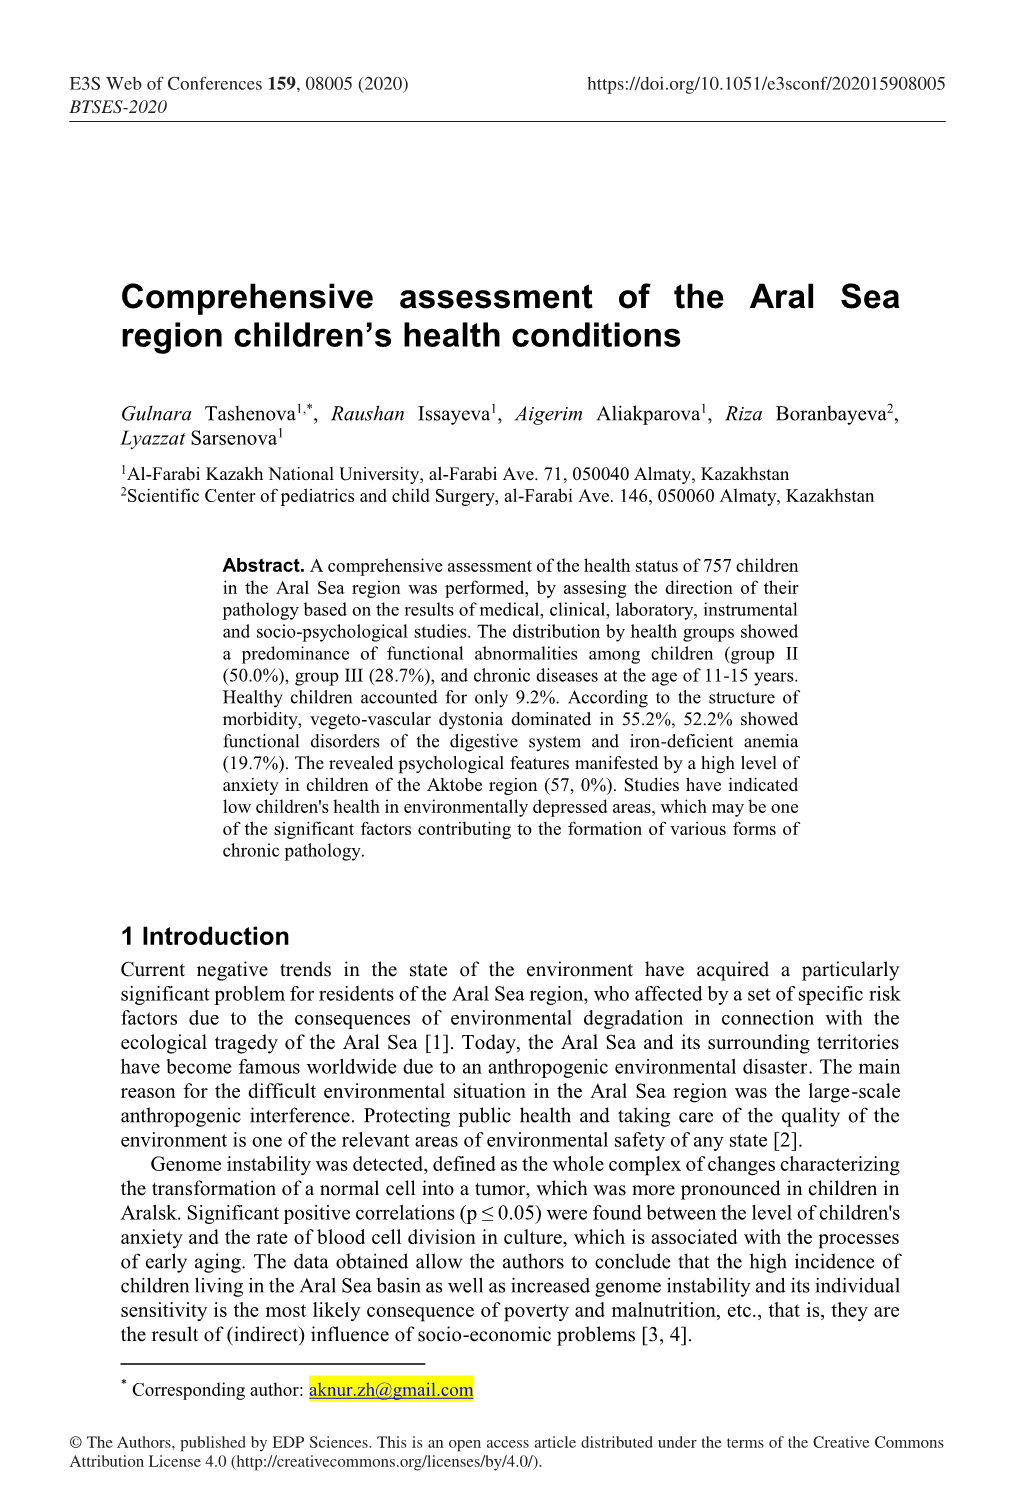 Comprehensive Assessment of the Aral Sea Region Children's Health